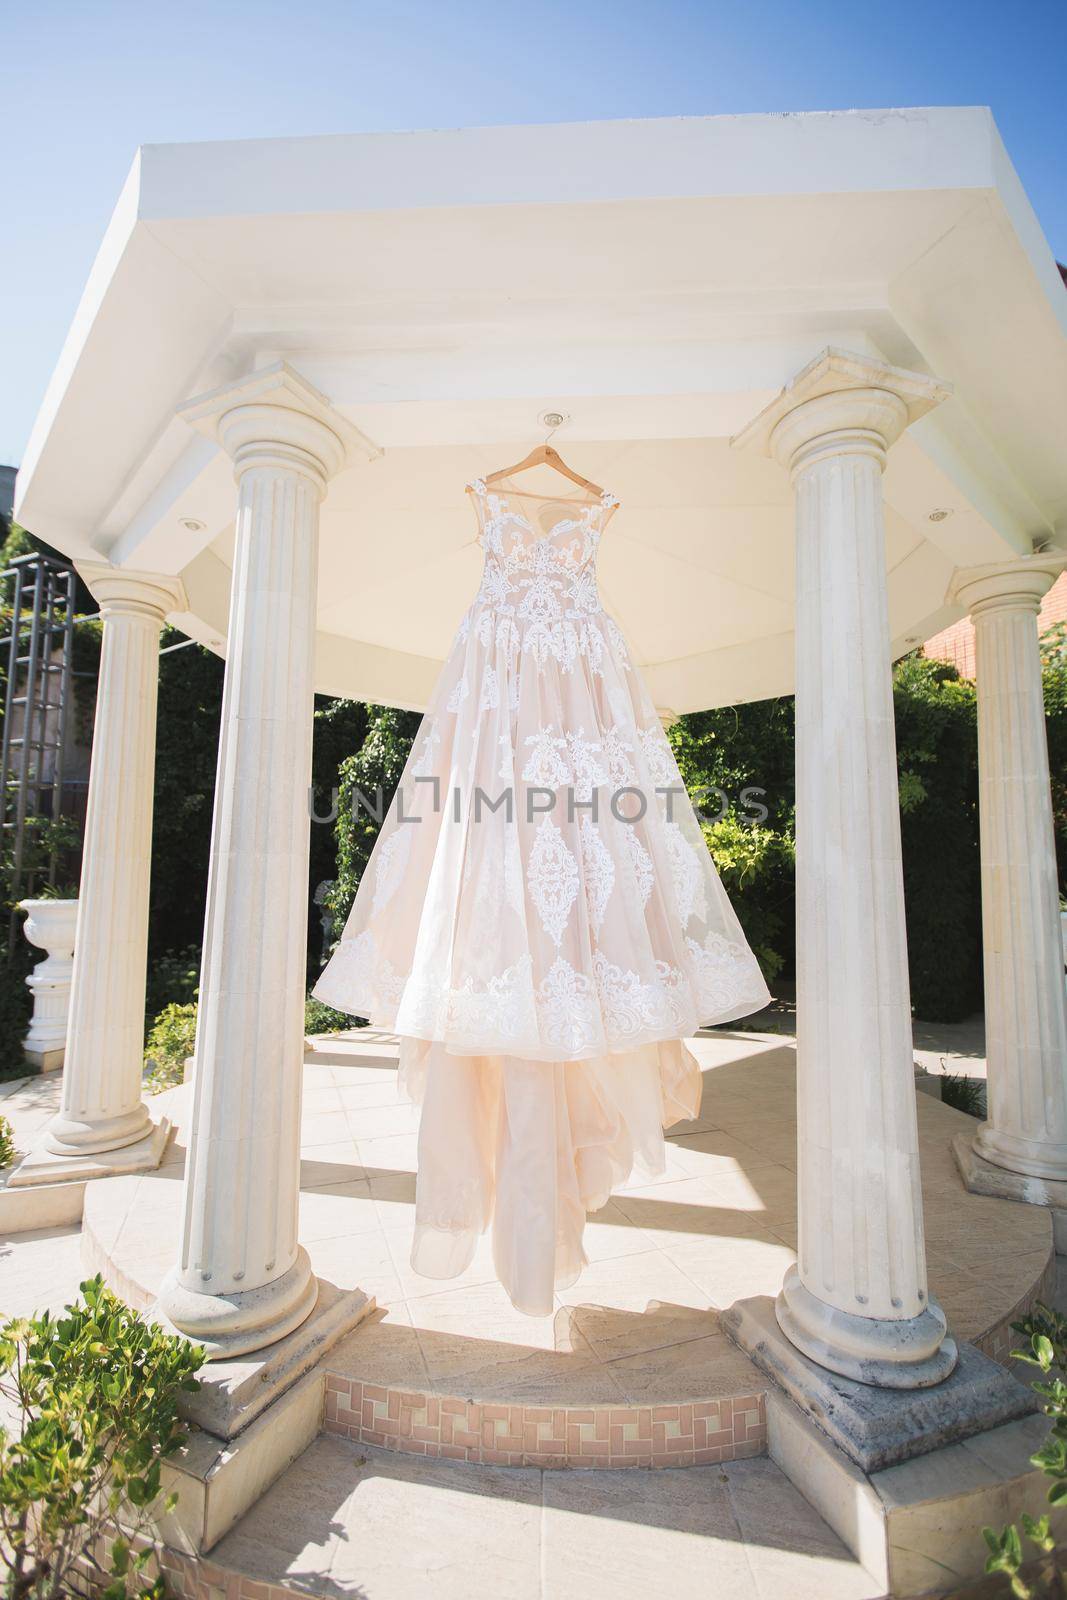 The wedding dress is hanging in a beautiful white gazebo.